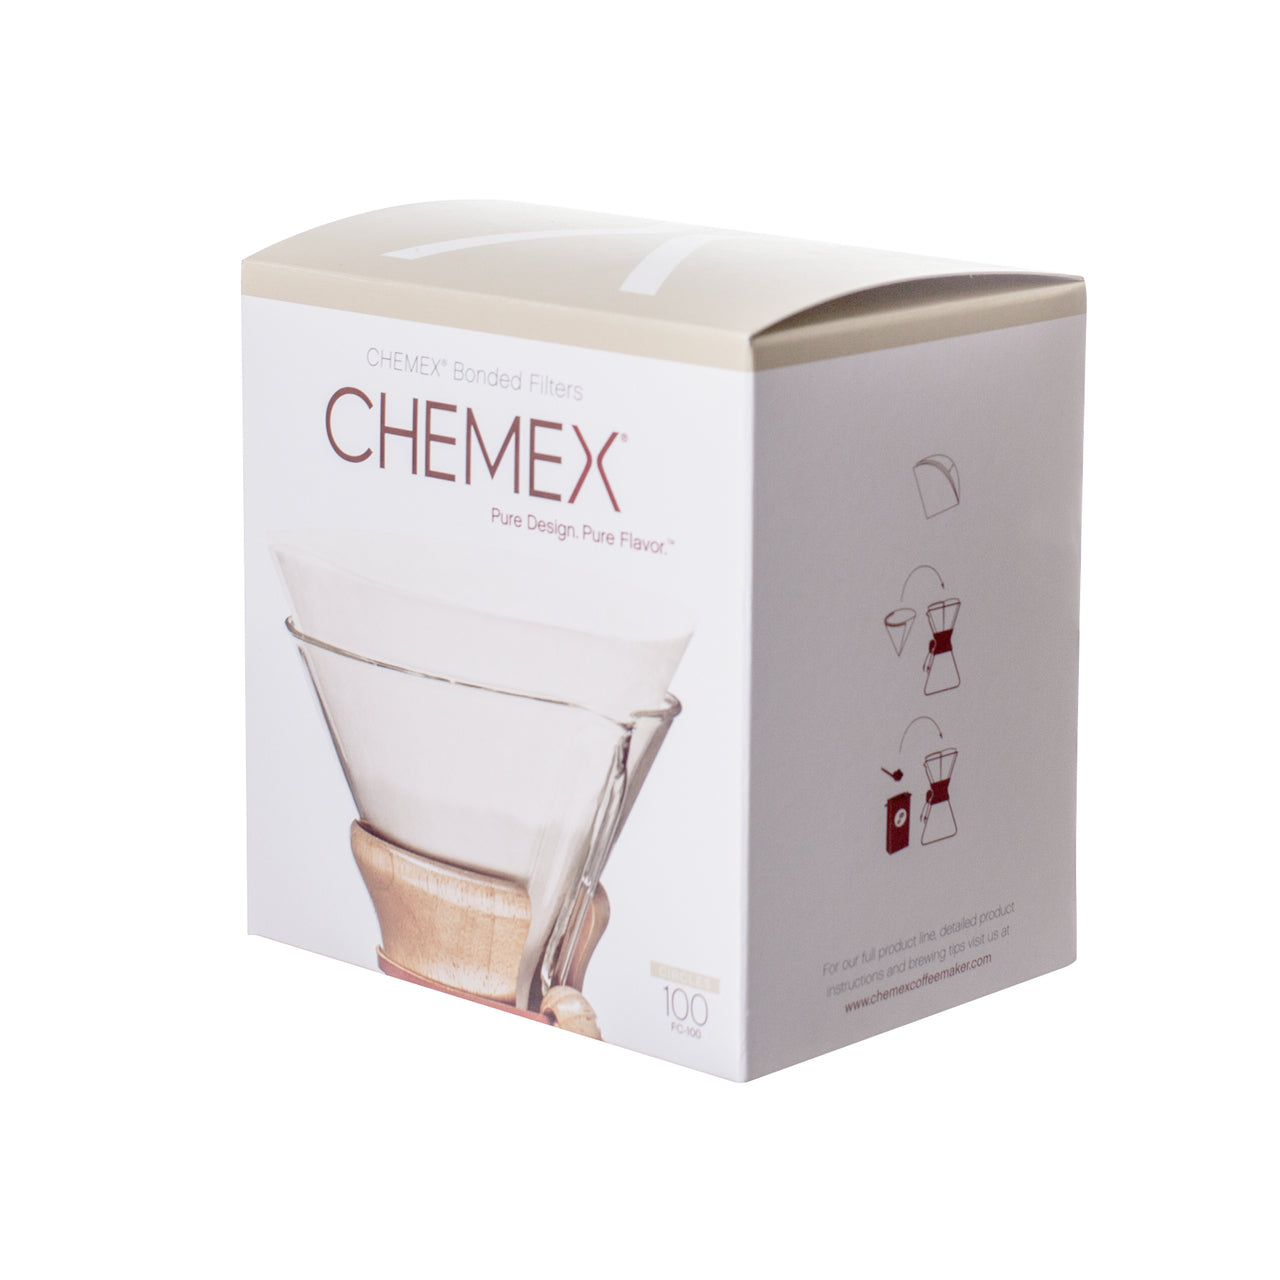 Chemex Bonded Filters | Circles